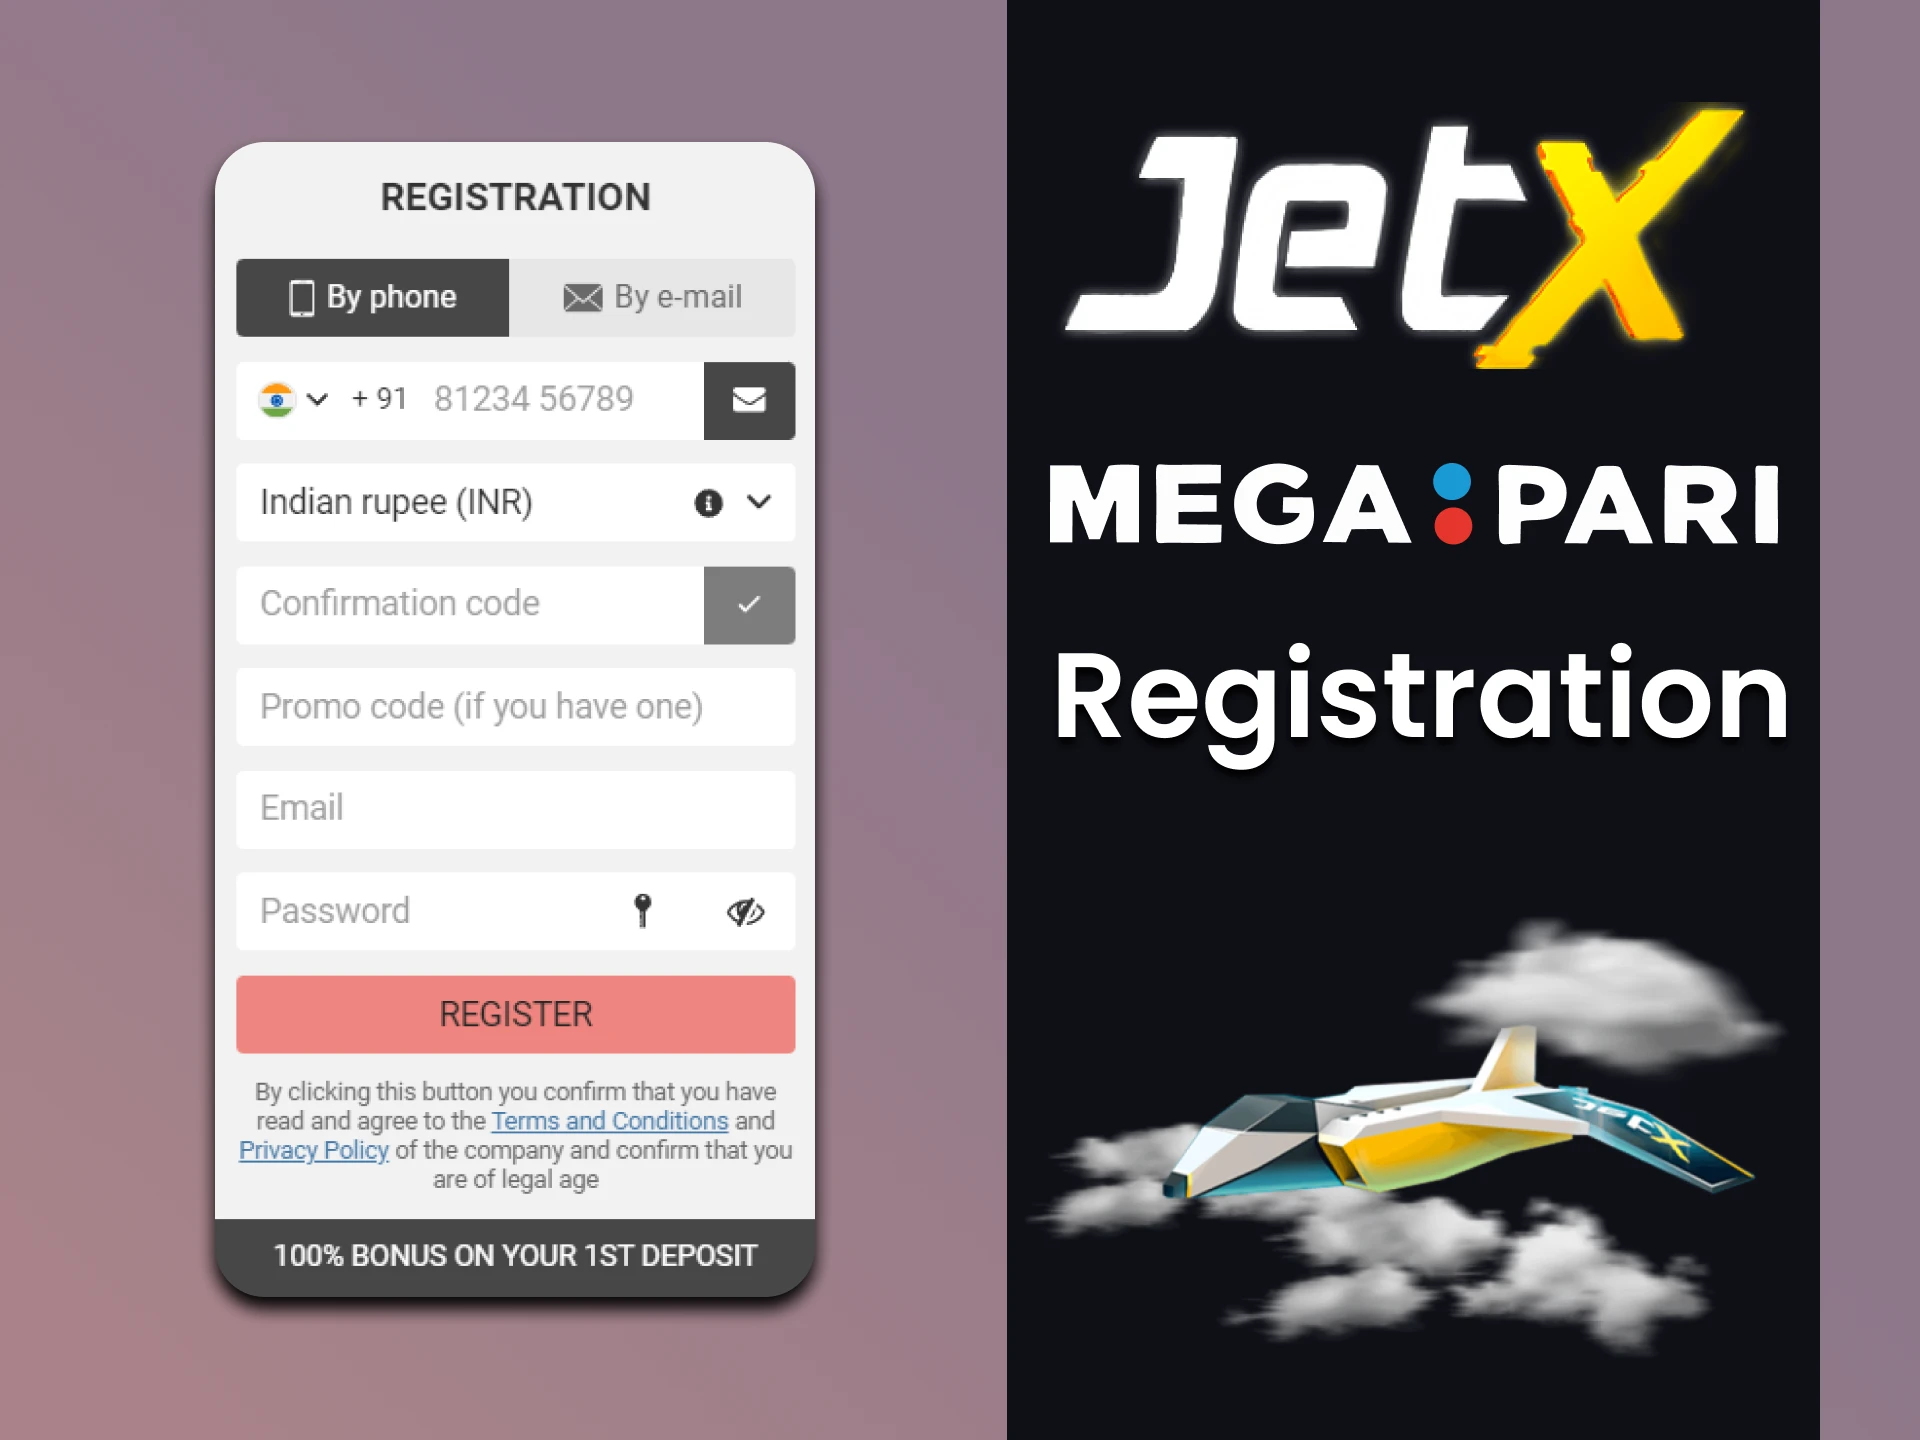 Register on Megapari to play JetX.